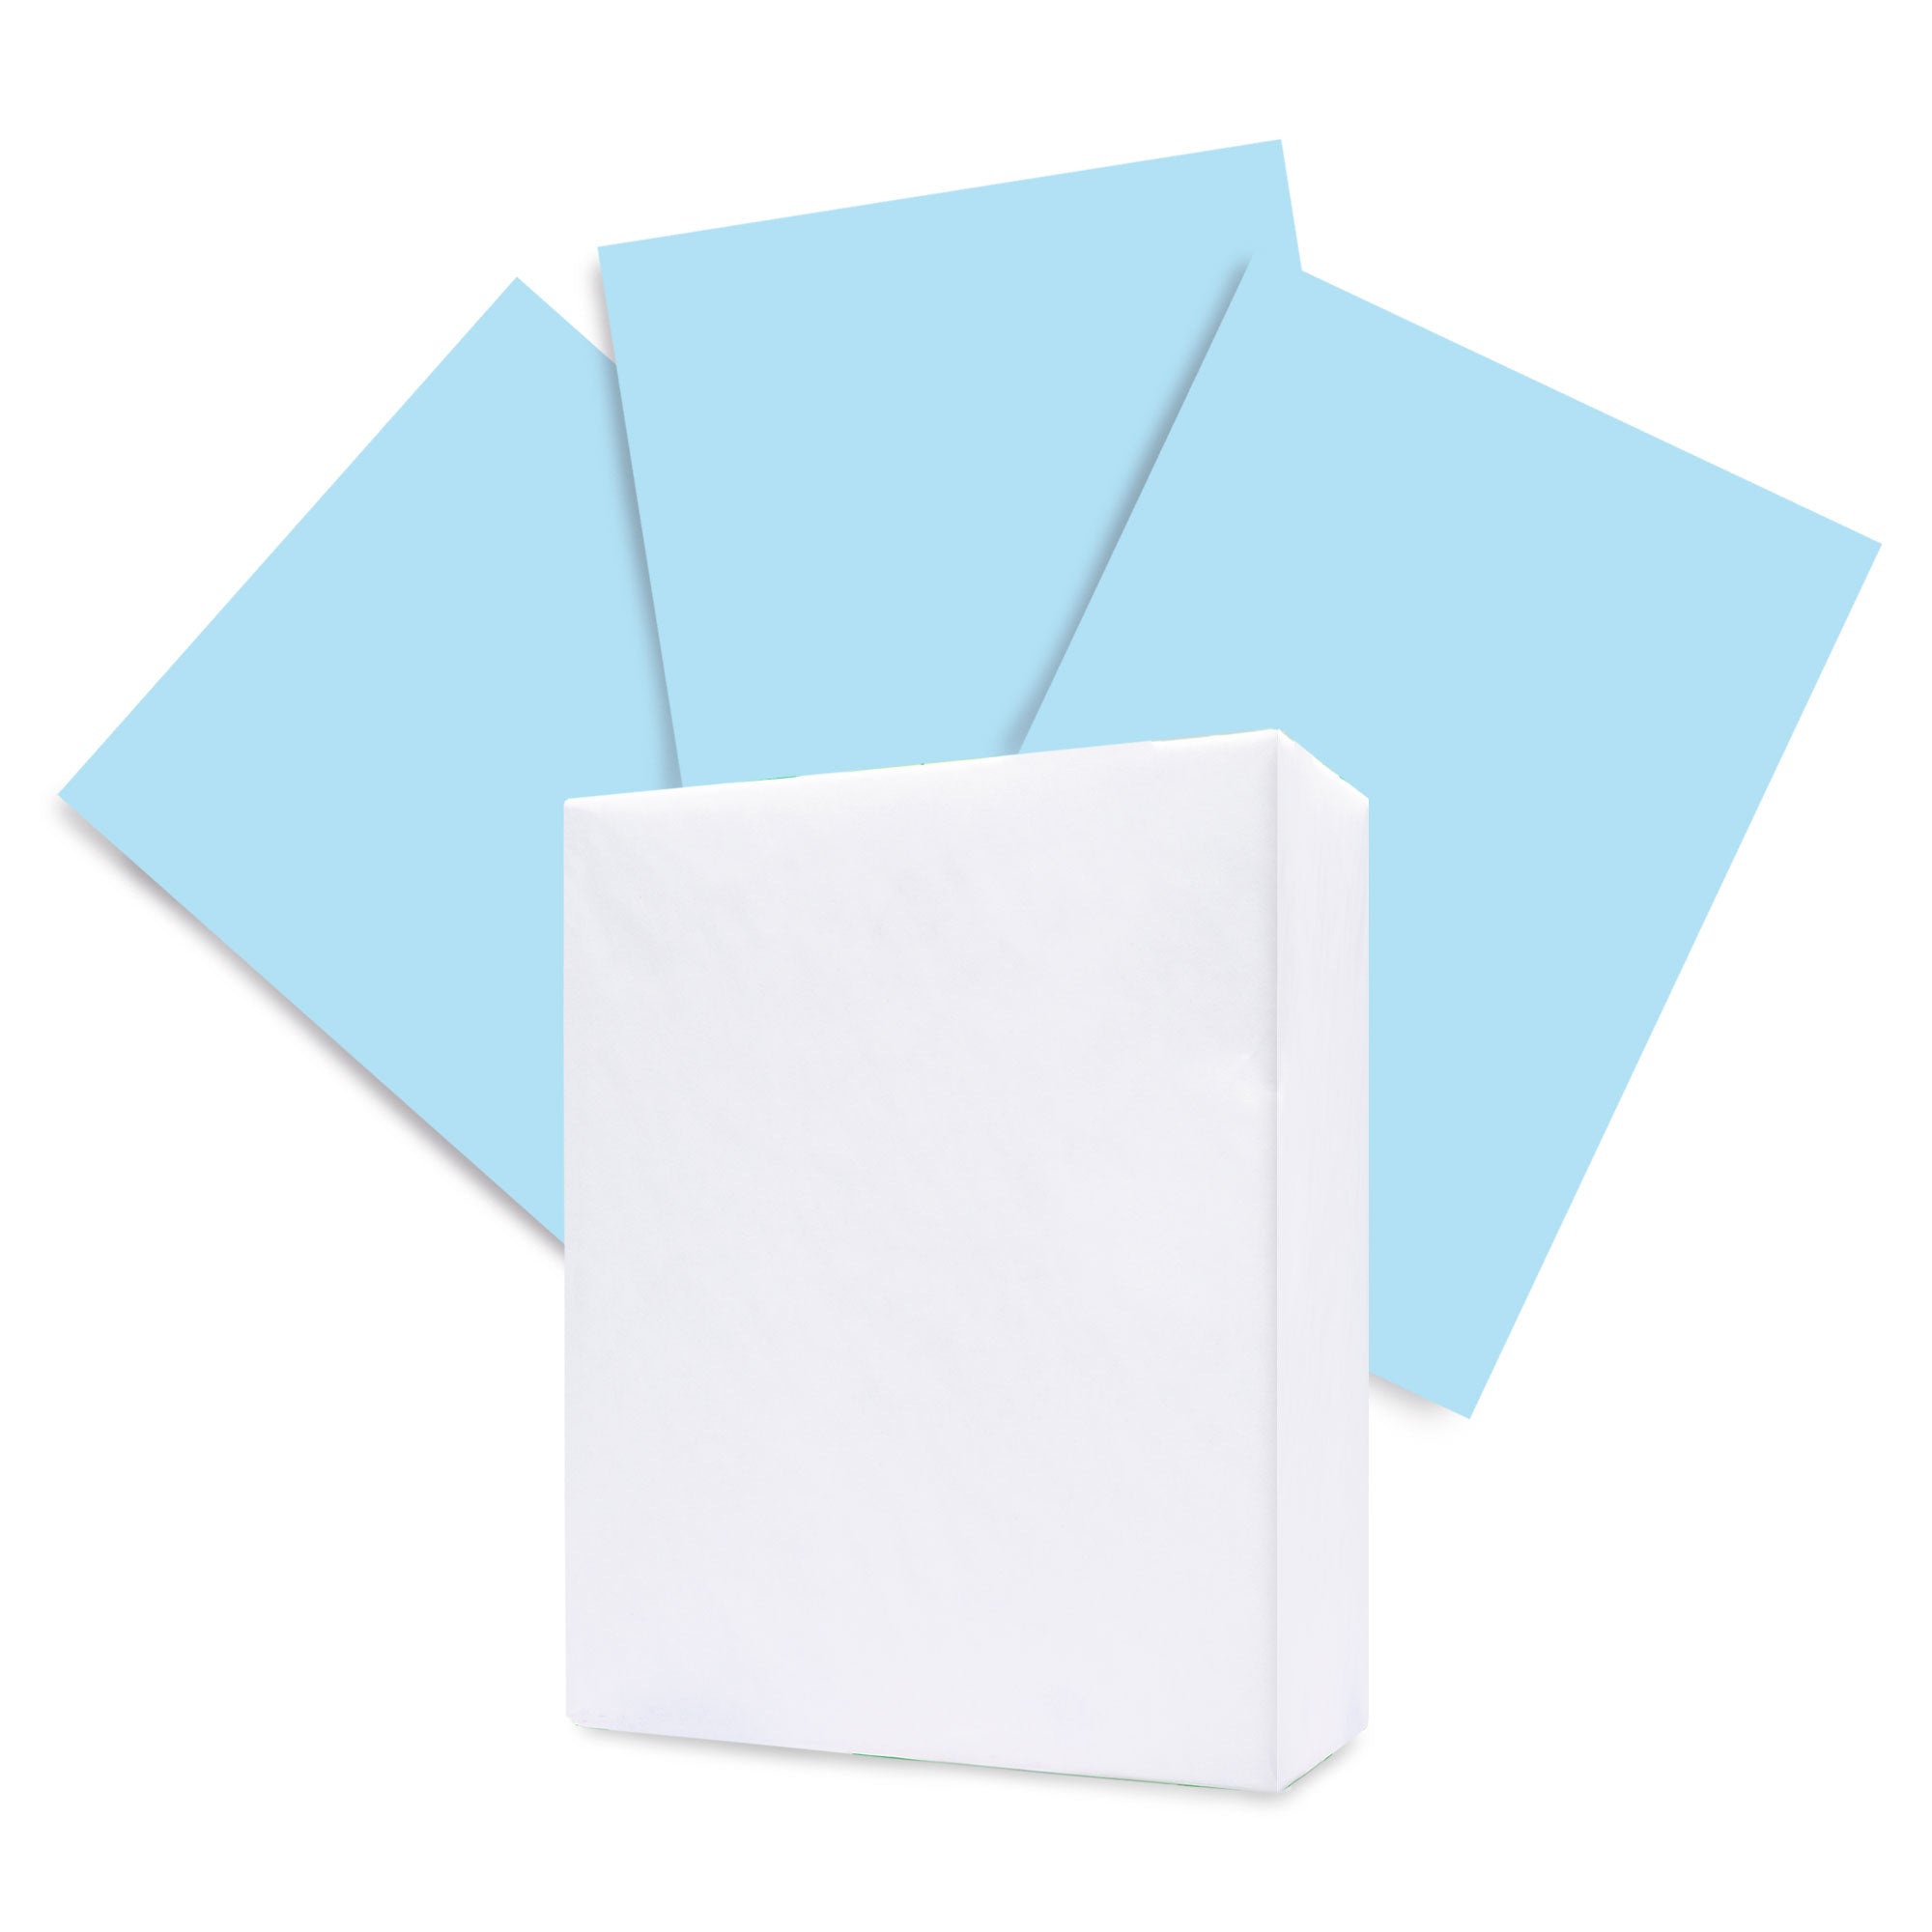 Via 8.5 x 11 28/70 Premium Opaque Colors Paper 500 Sheets/Ream Light Pink